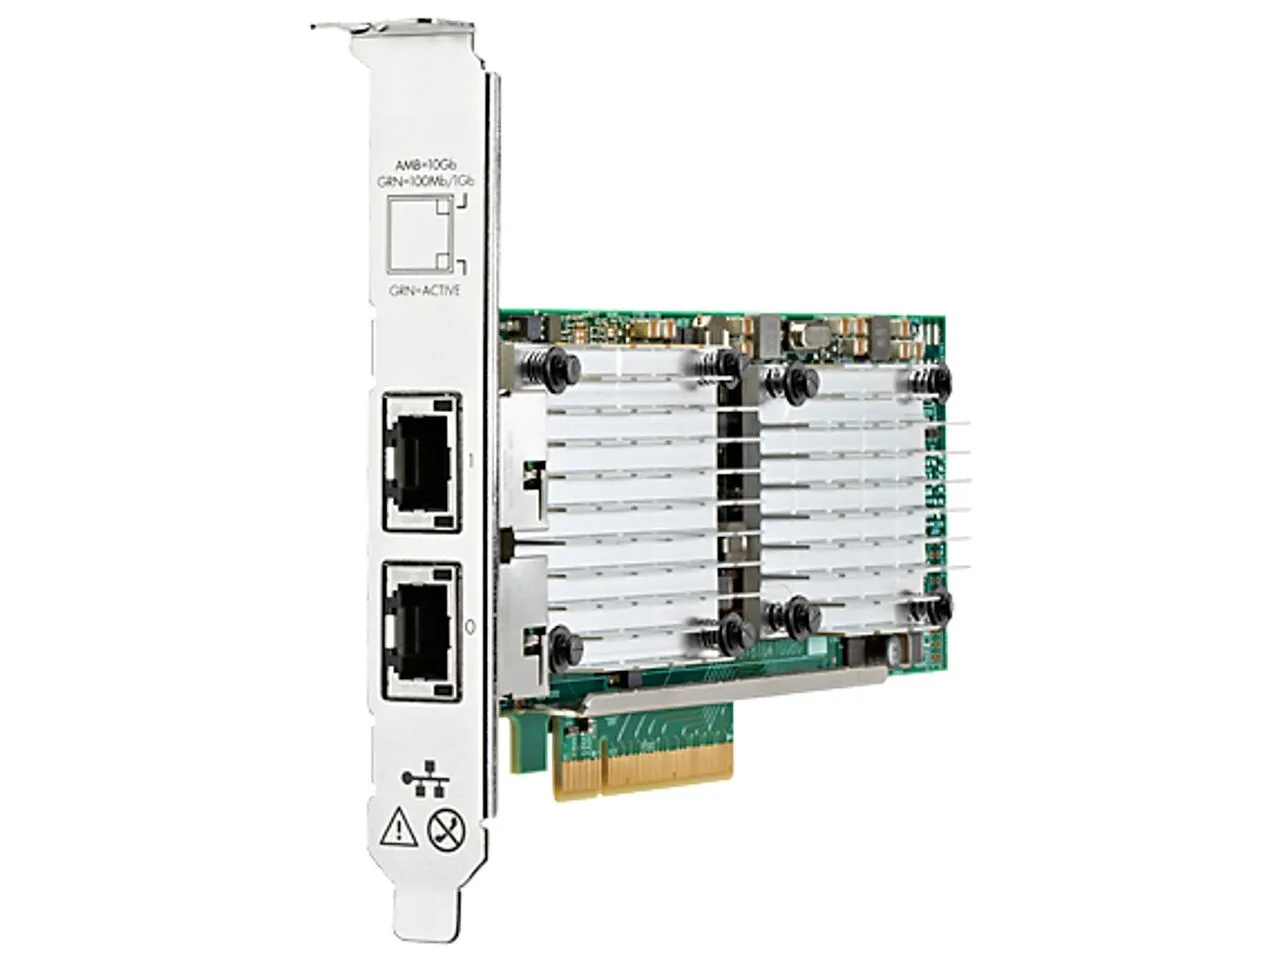   Network Adapter 657128-002 for HPE Proliant DL580 Gen9 Server 